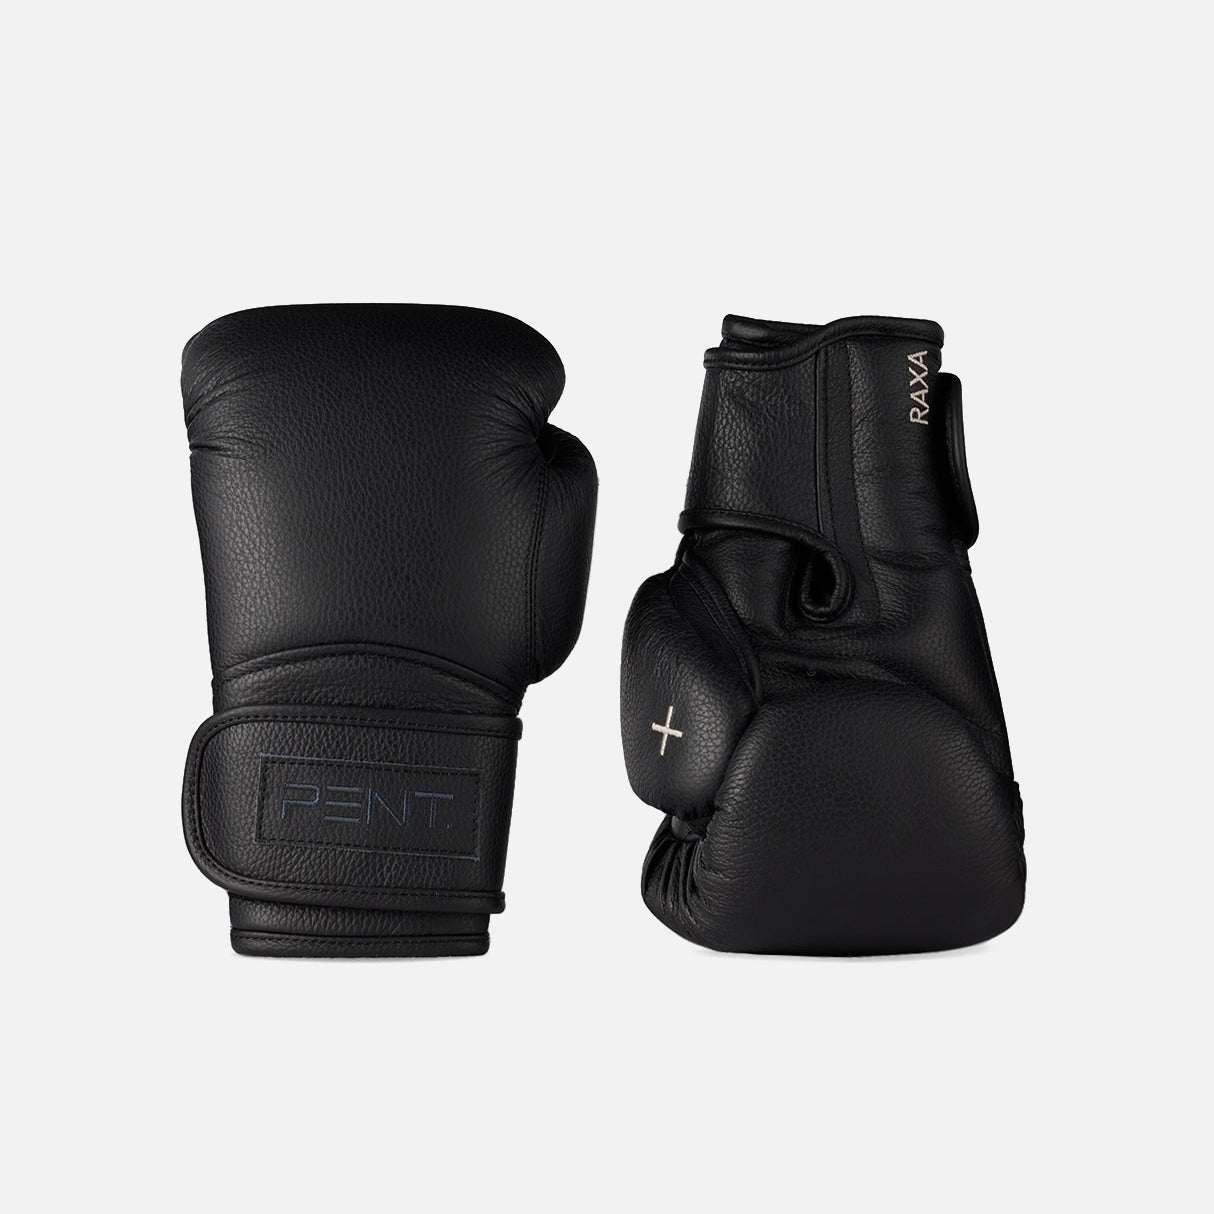 Raxa Leather Boxing Gloves